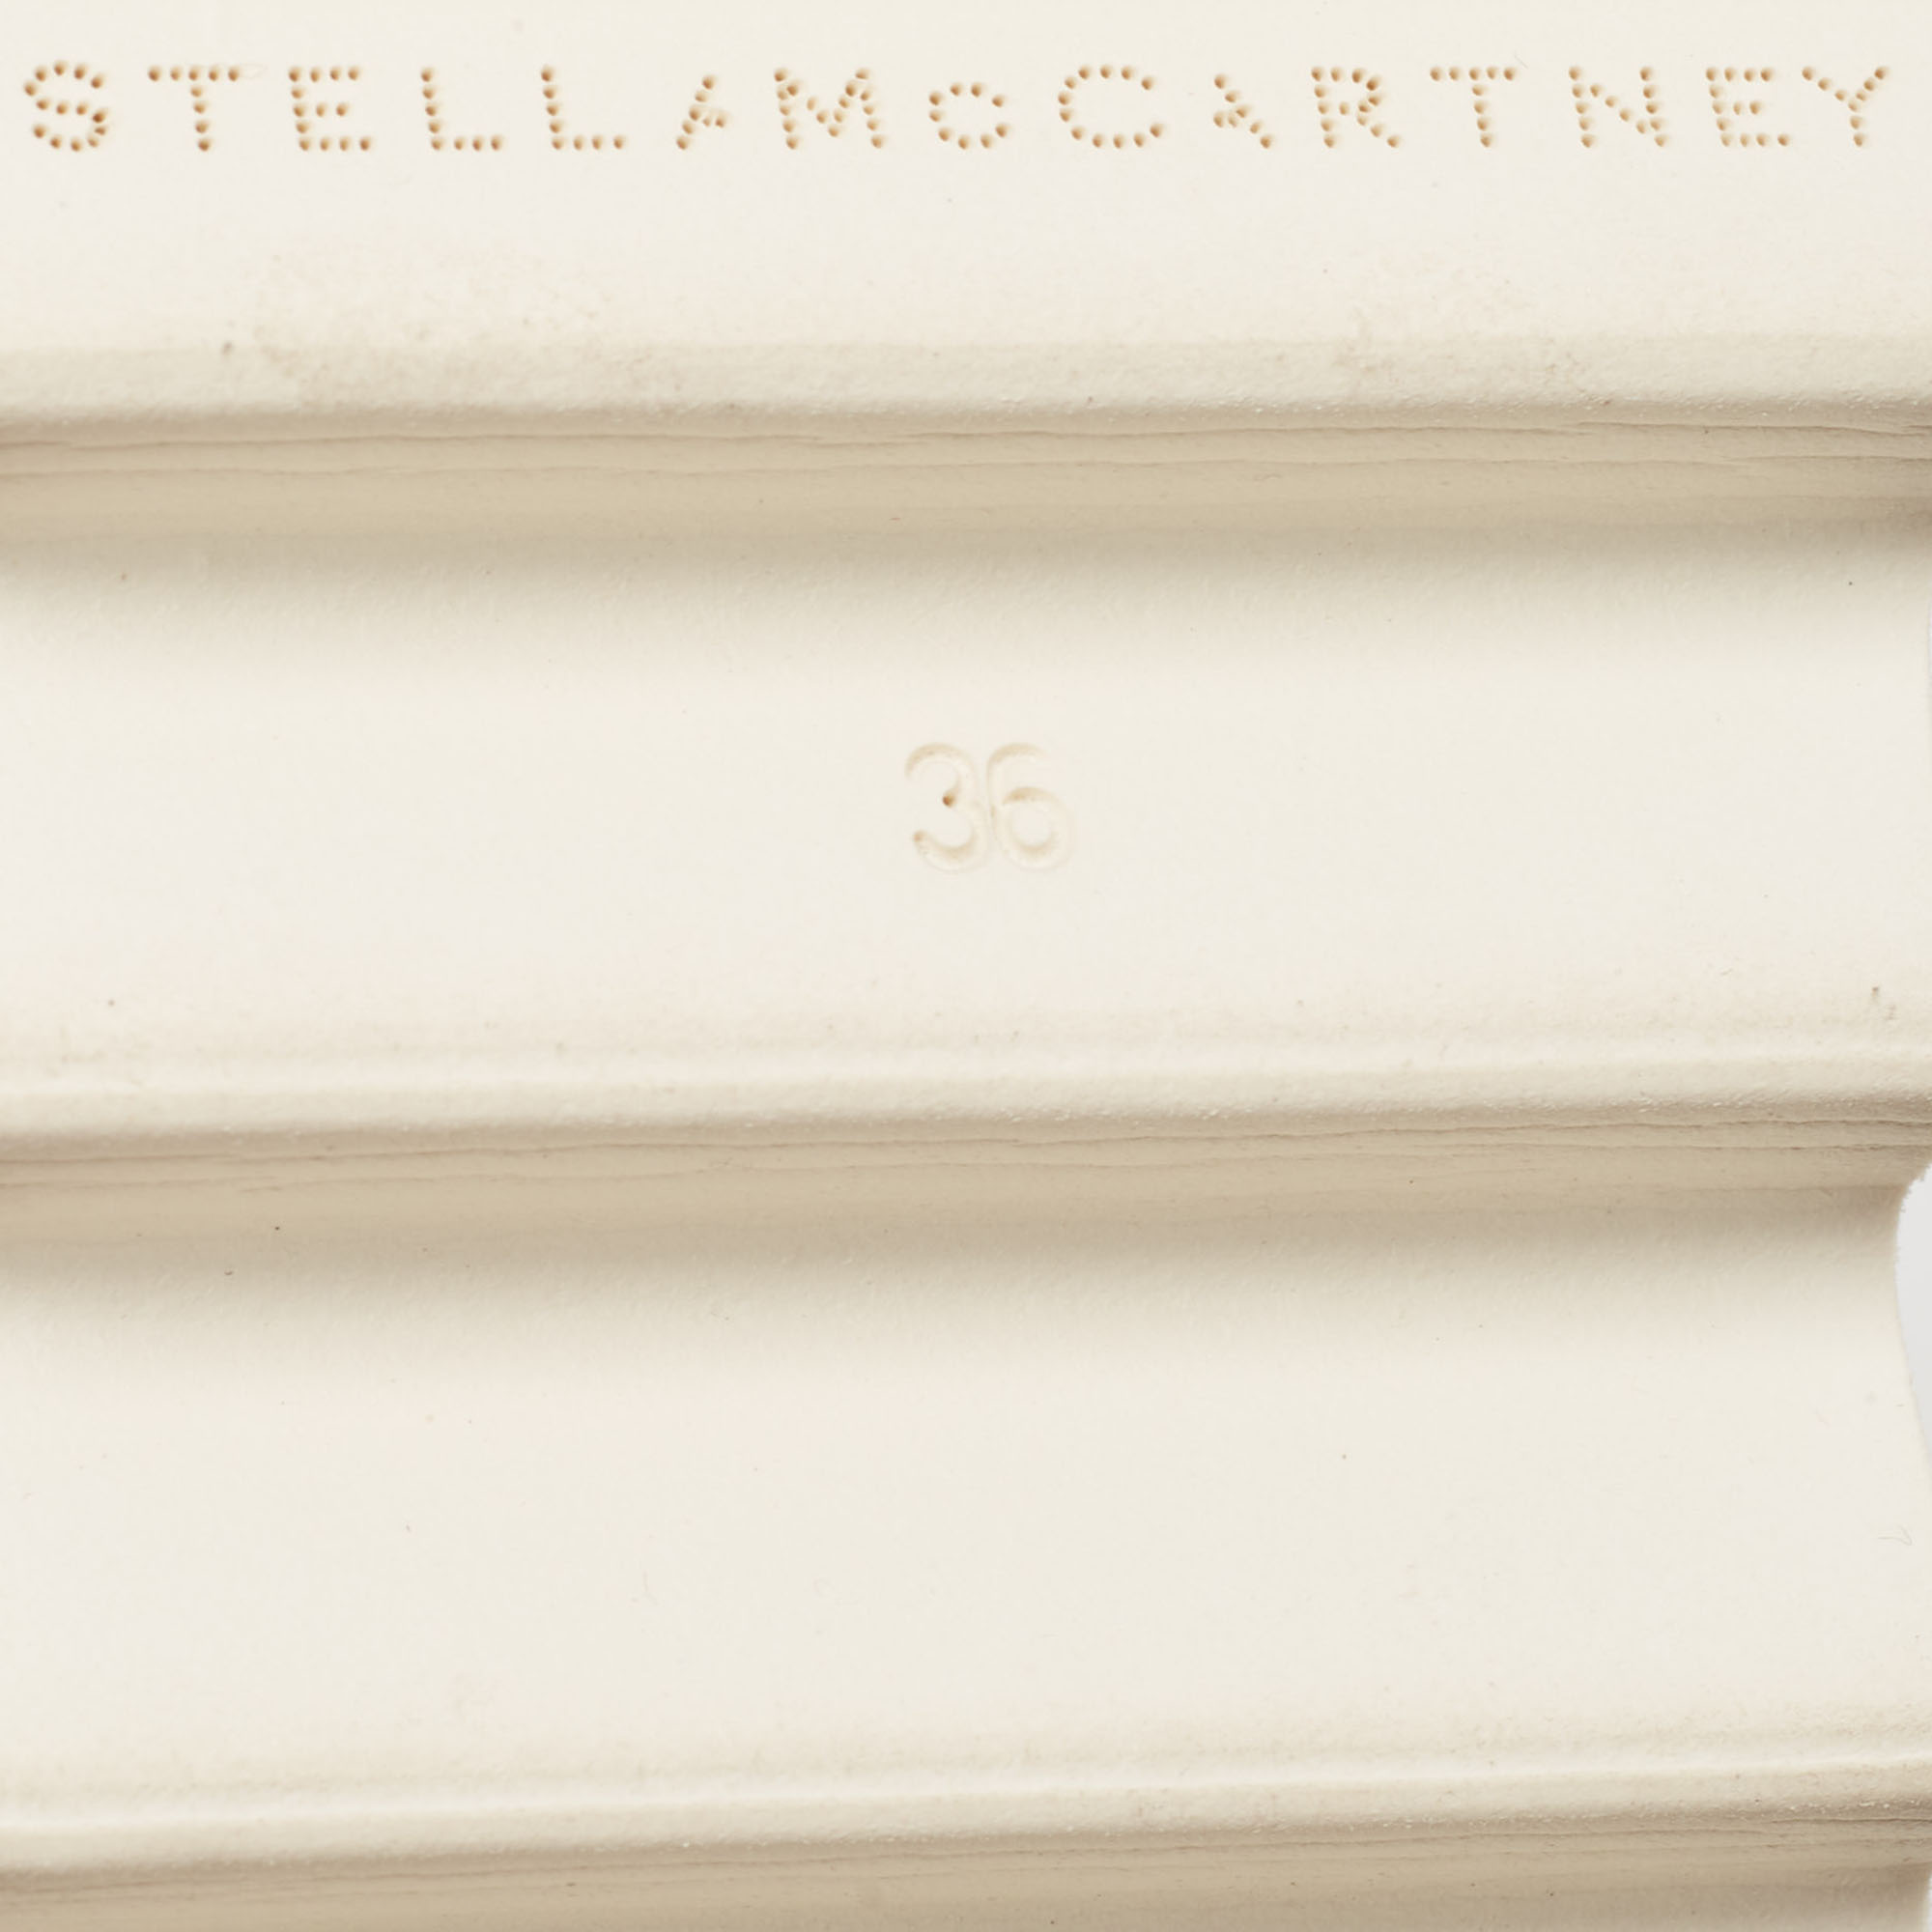 Stella McCartney White Lace Elyse Platform Lace Up Sneakers Size 36